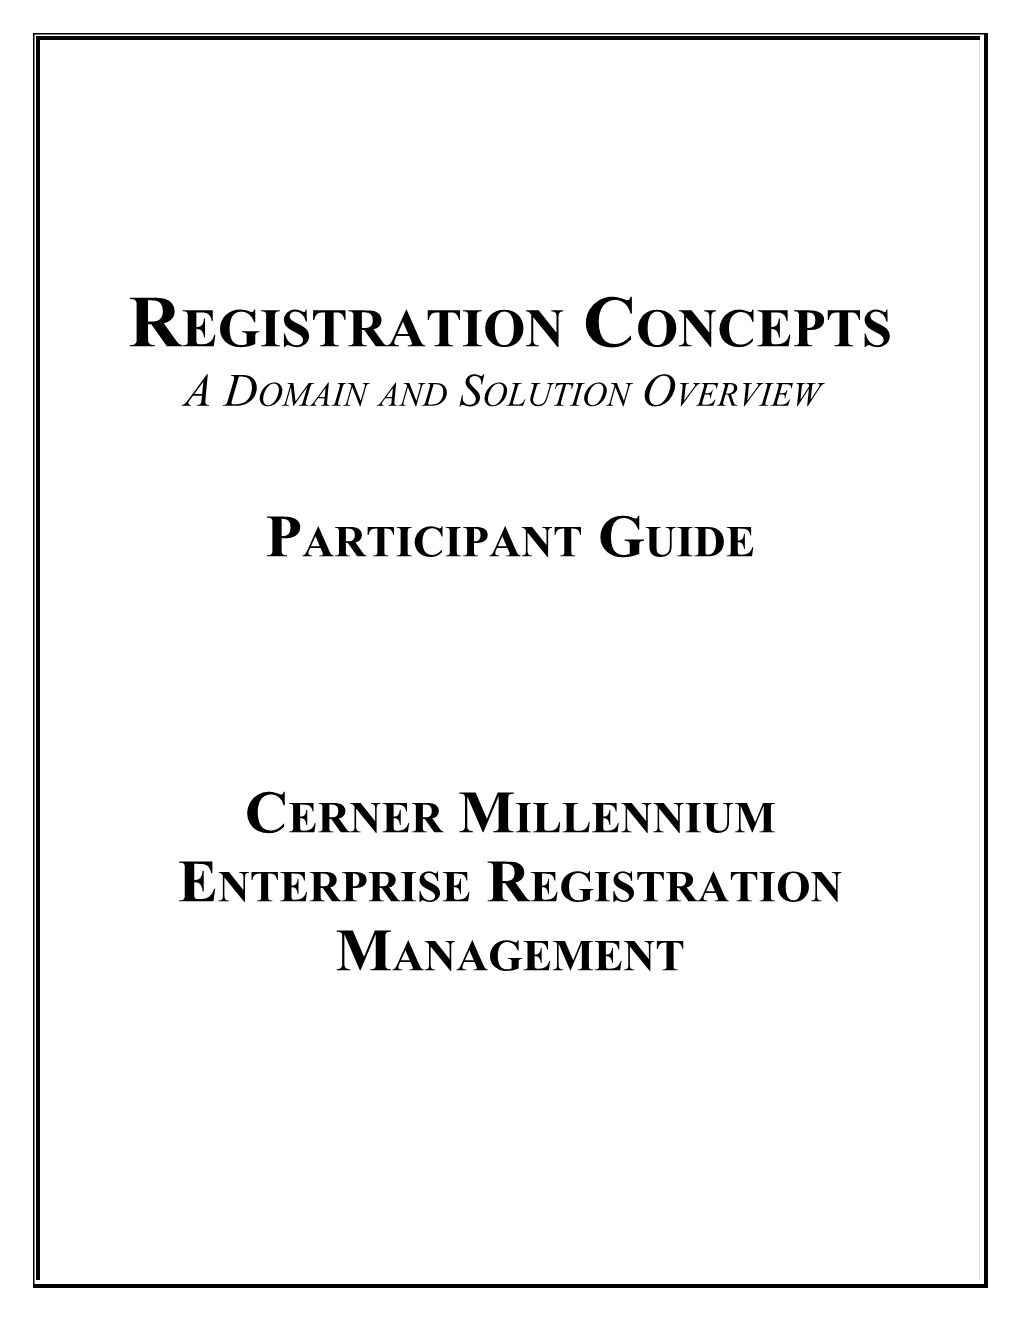 Registration Concepts